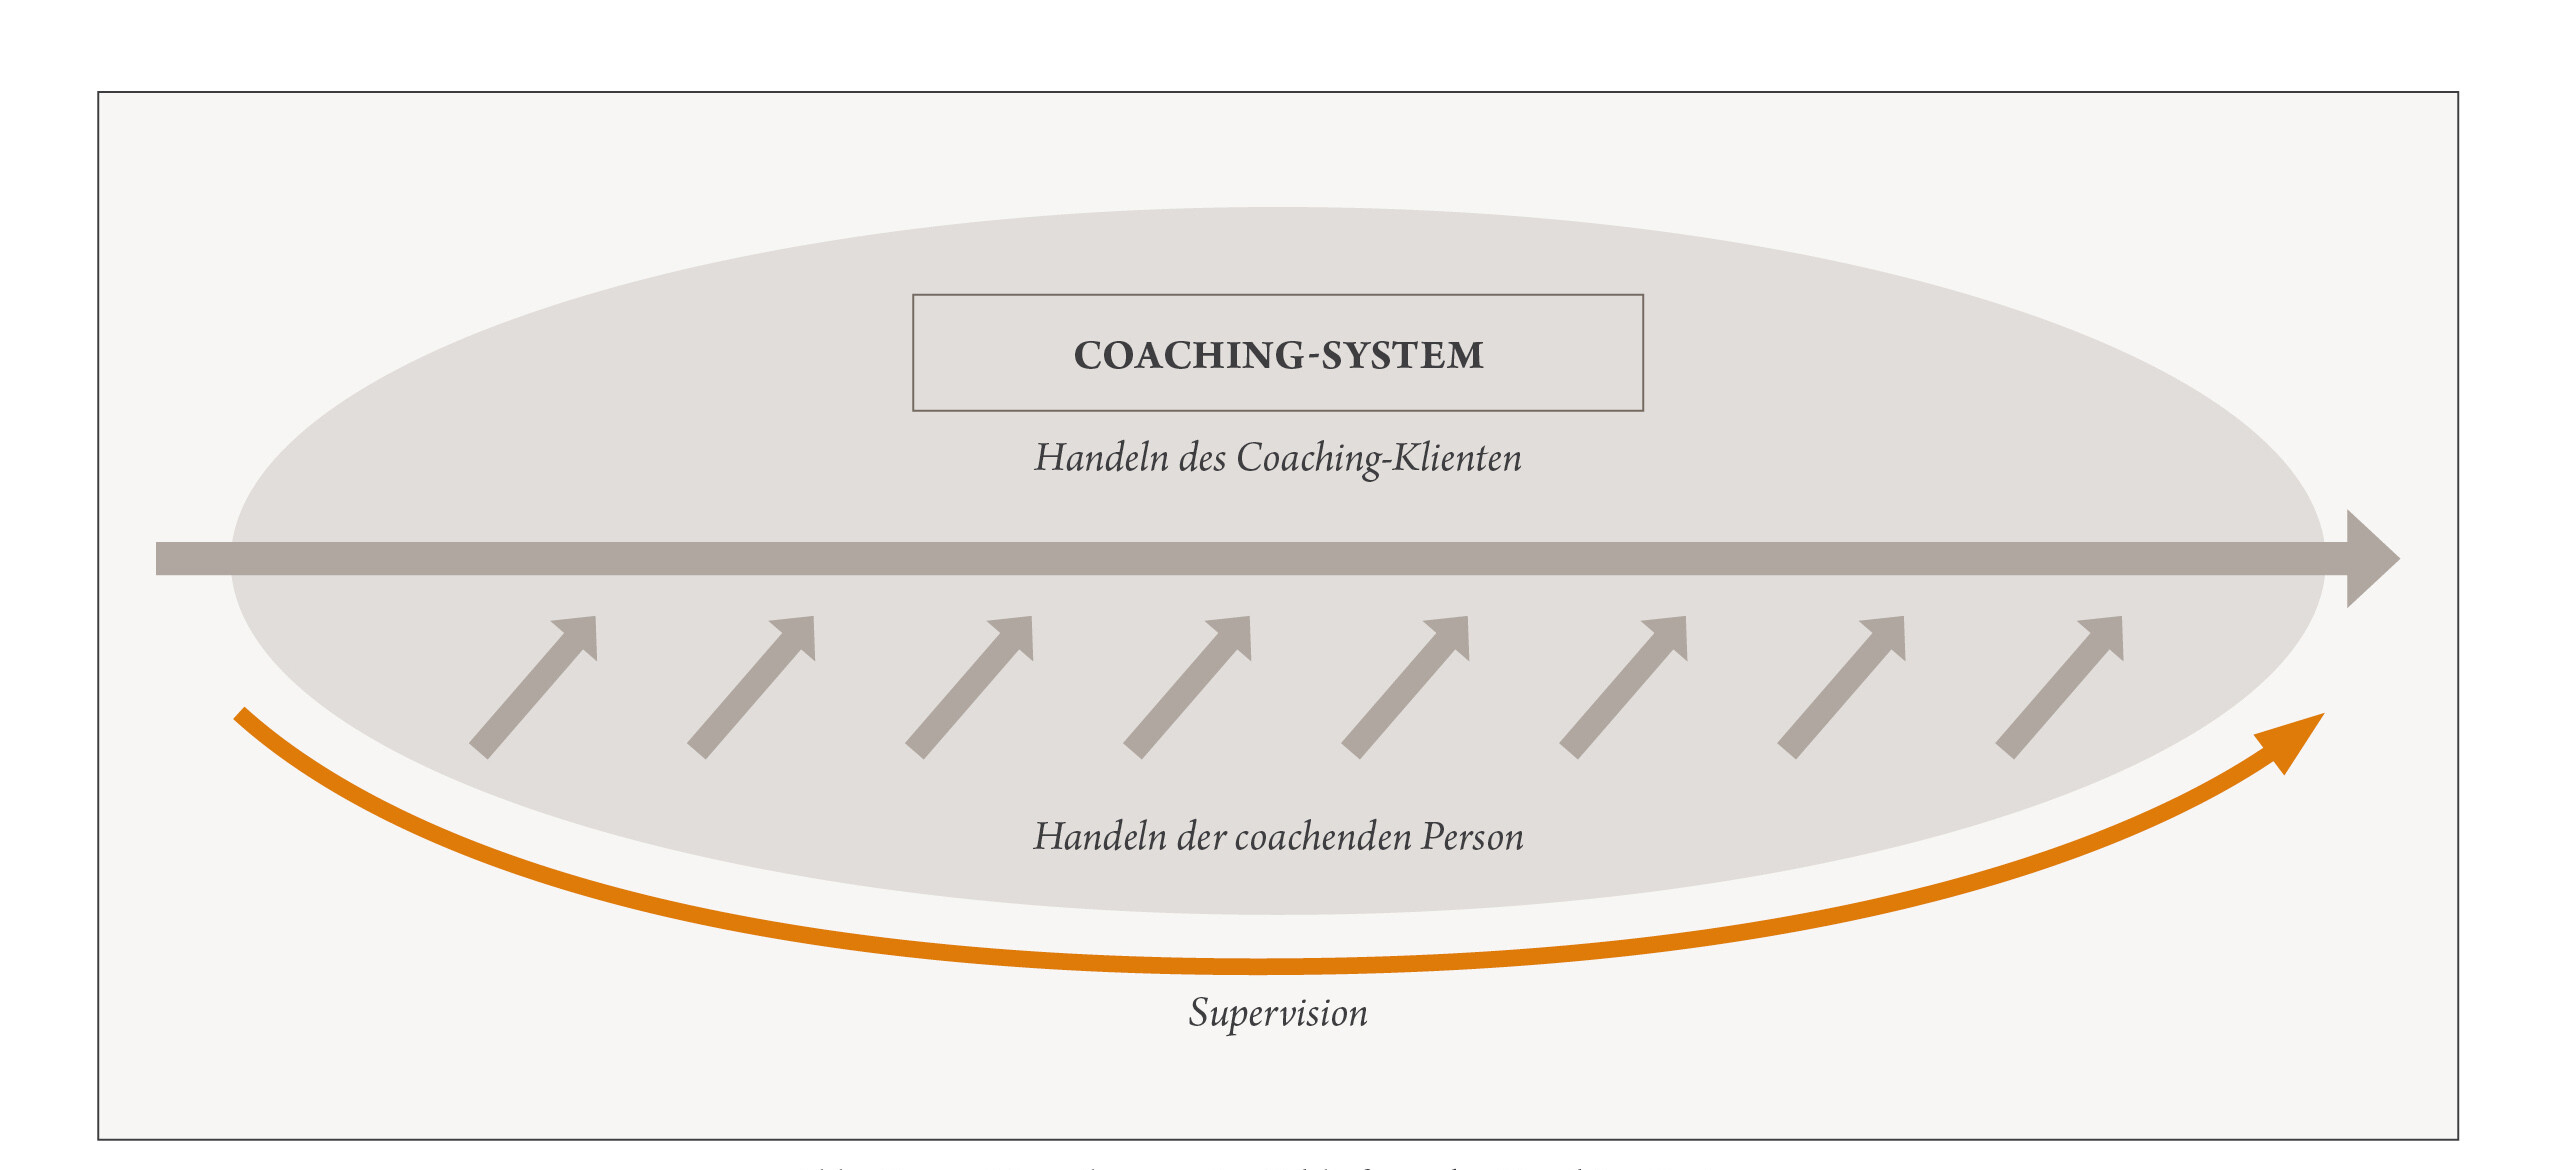 Supervision als operative Schließung des Coaching-Systems